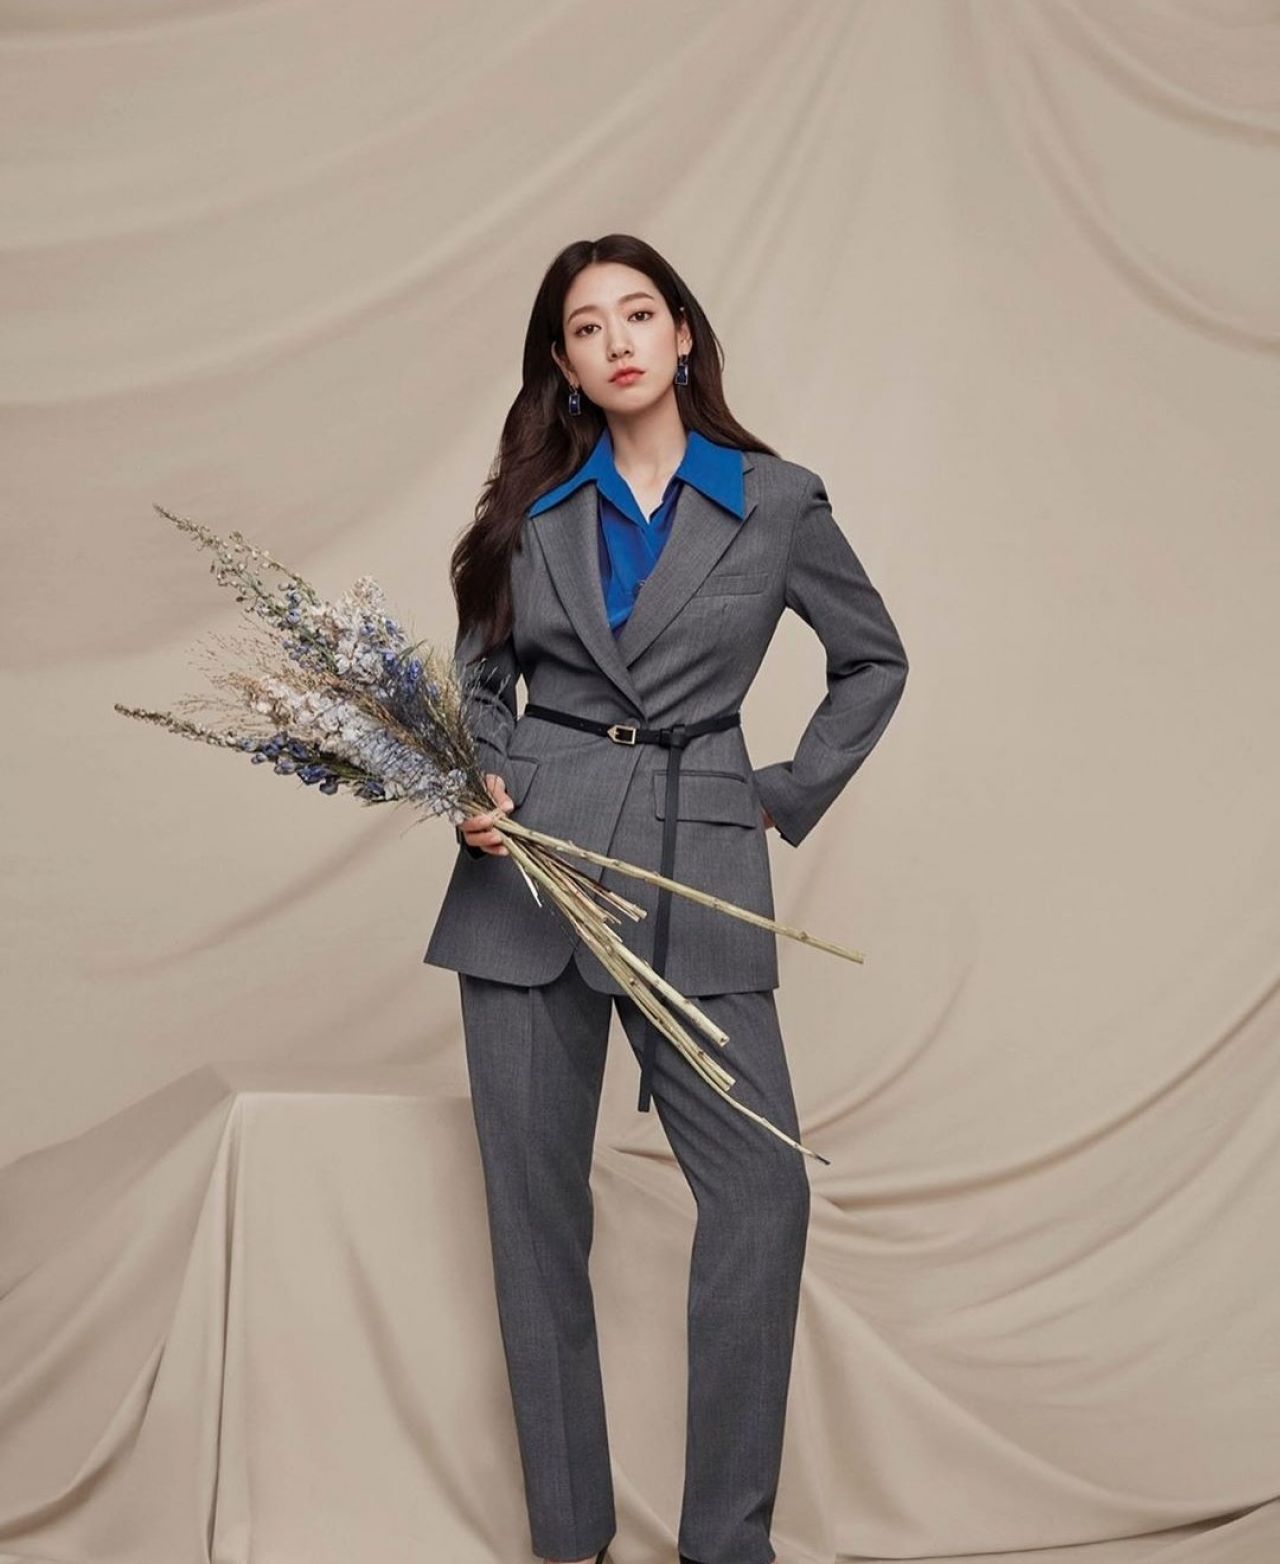 Park Shin-hye Style, Clothes, Outfits and Fashion • CelebMafia